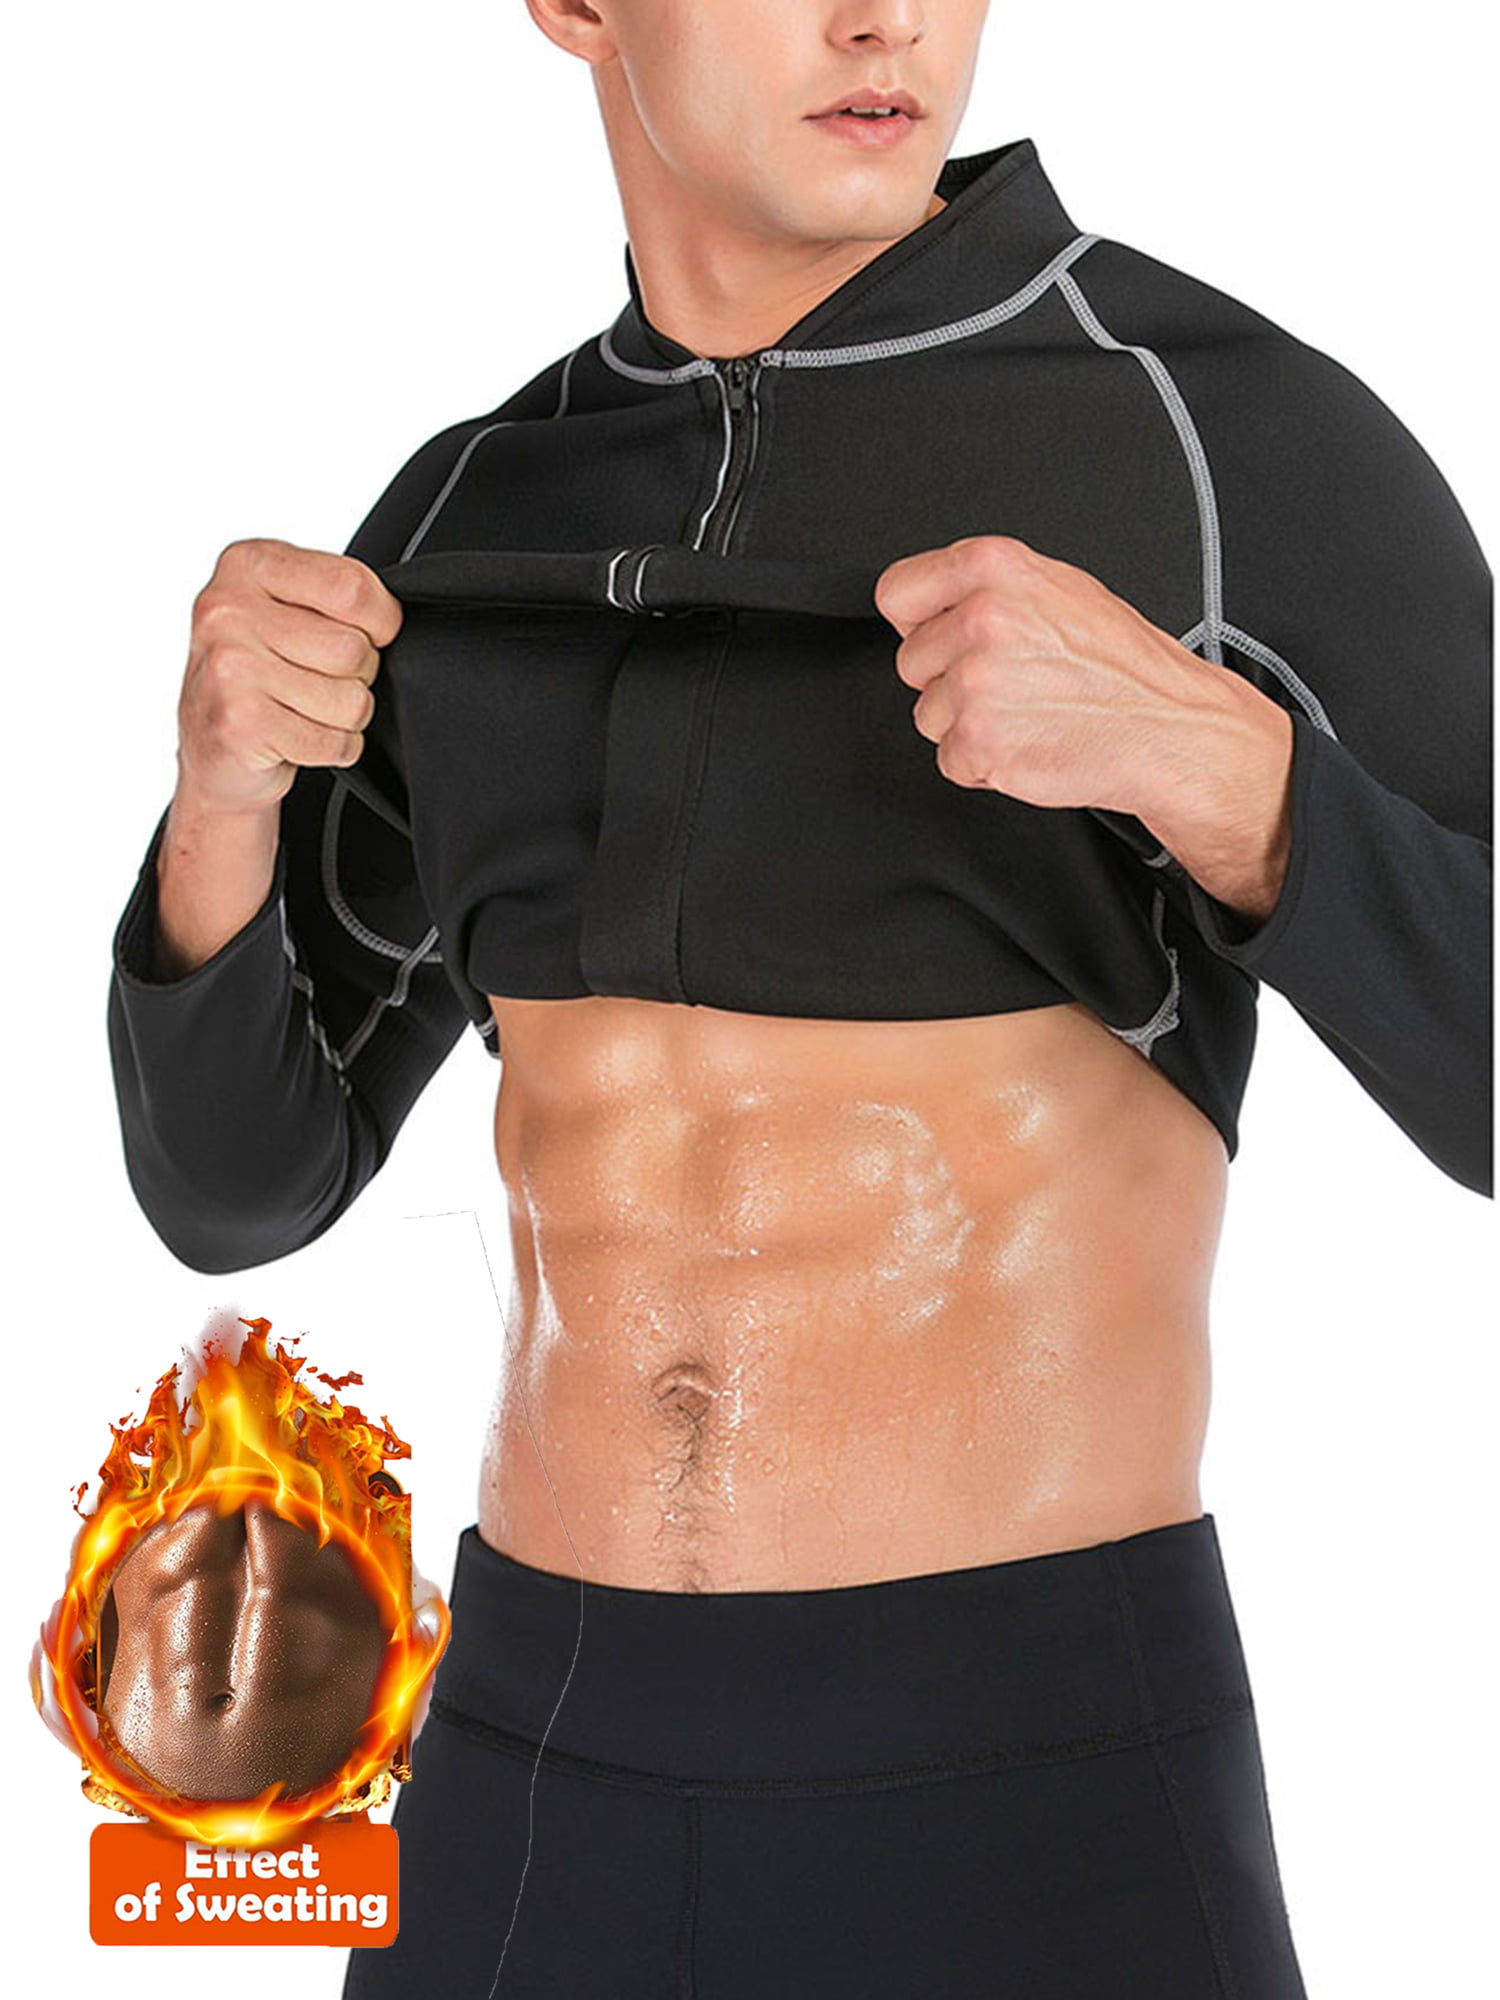 DODOING Men Sauna Sweat Zipper Vest for Weight Loss Hot Neoprene Corset Waist Trainer Body Top Shapewear Slimming Shirt Workout Suit